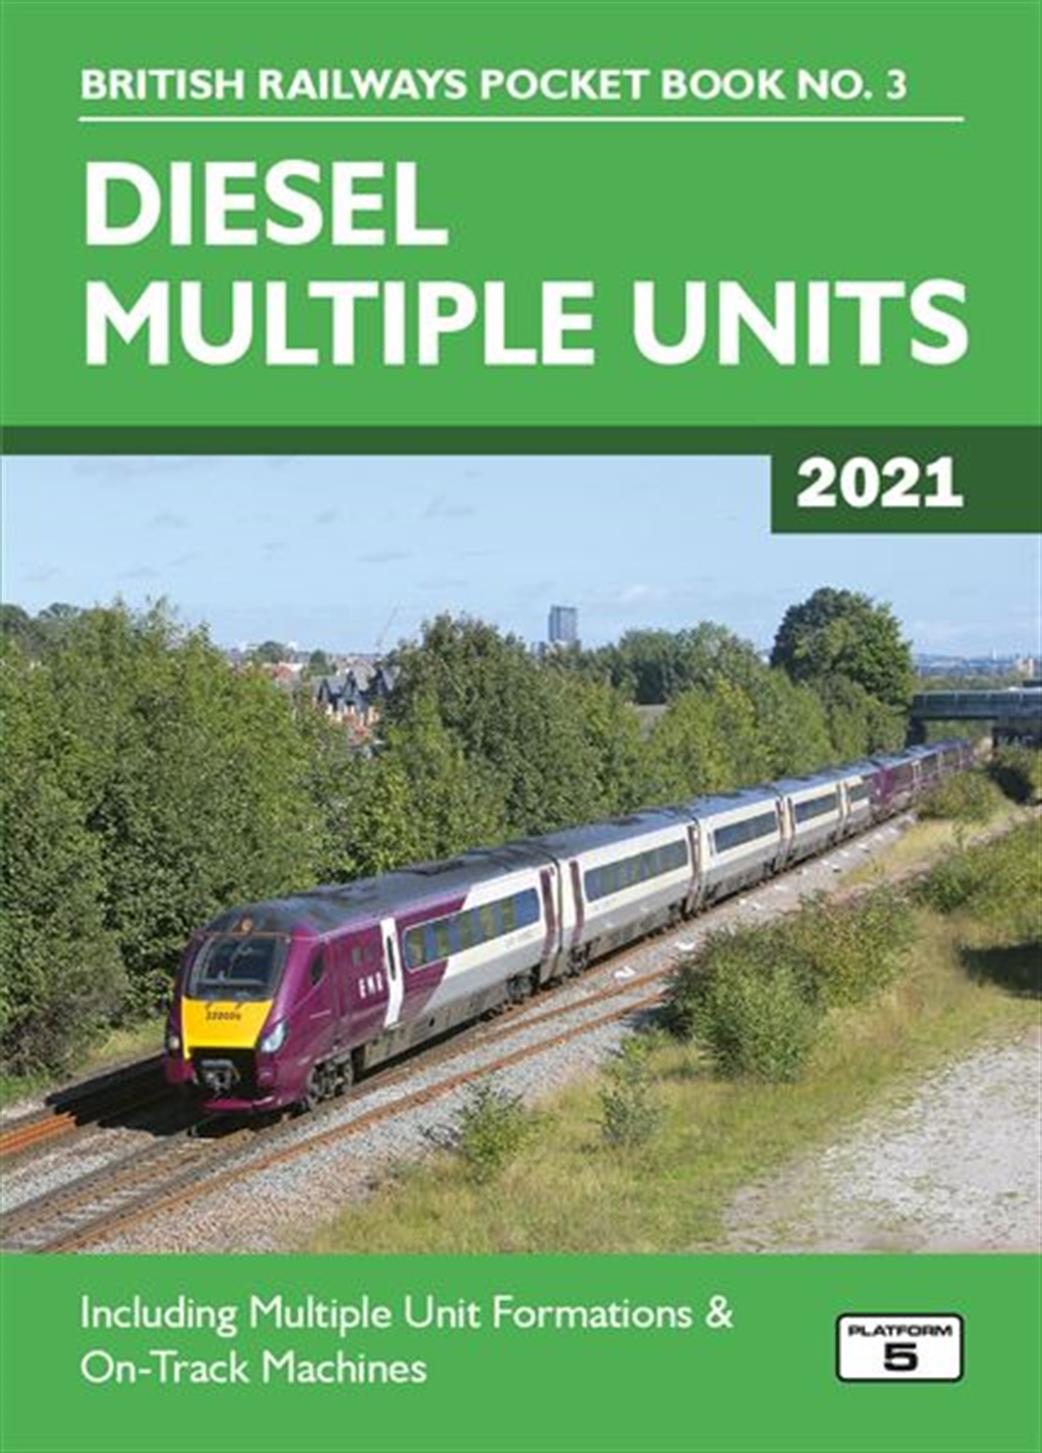 Platform 5 BRPB3 21 British Railways Diesel Multiple Units and On-Track Machines 2021 Pocket Book